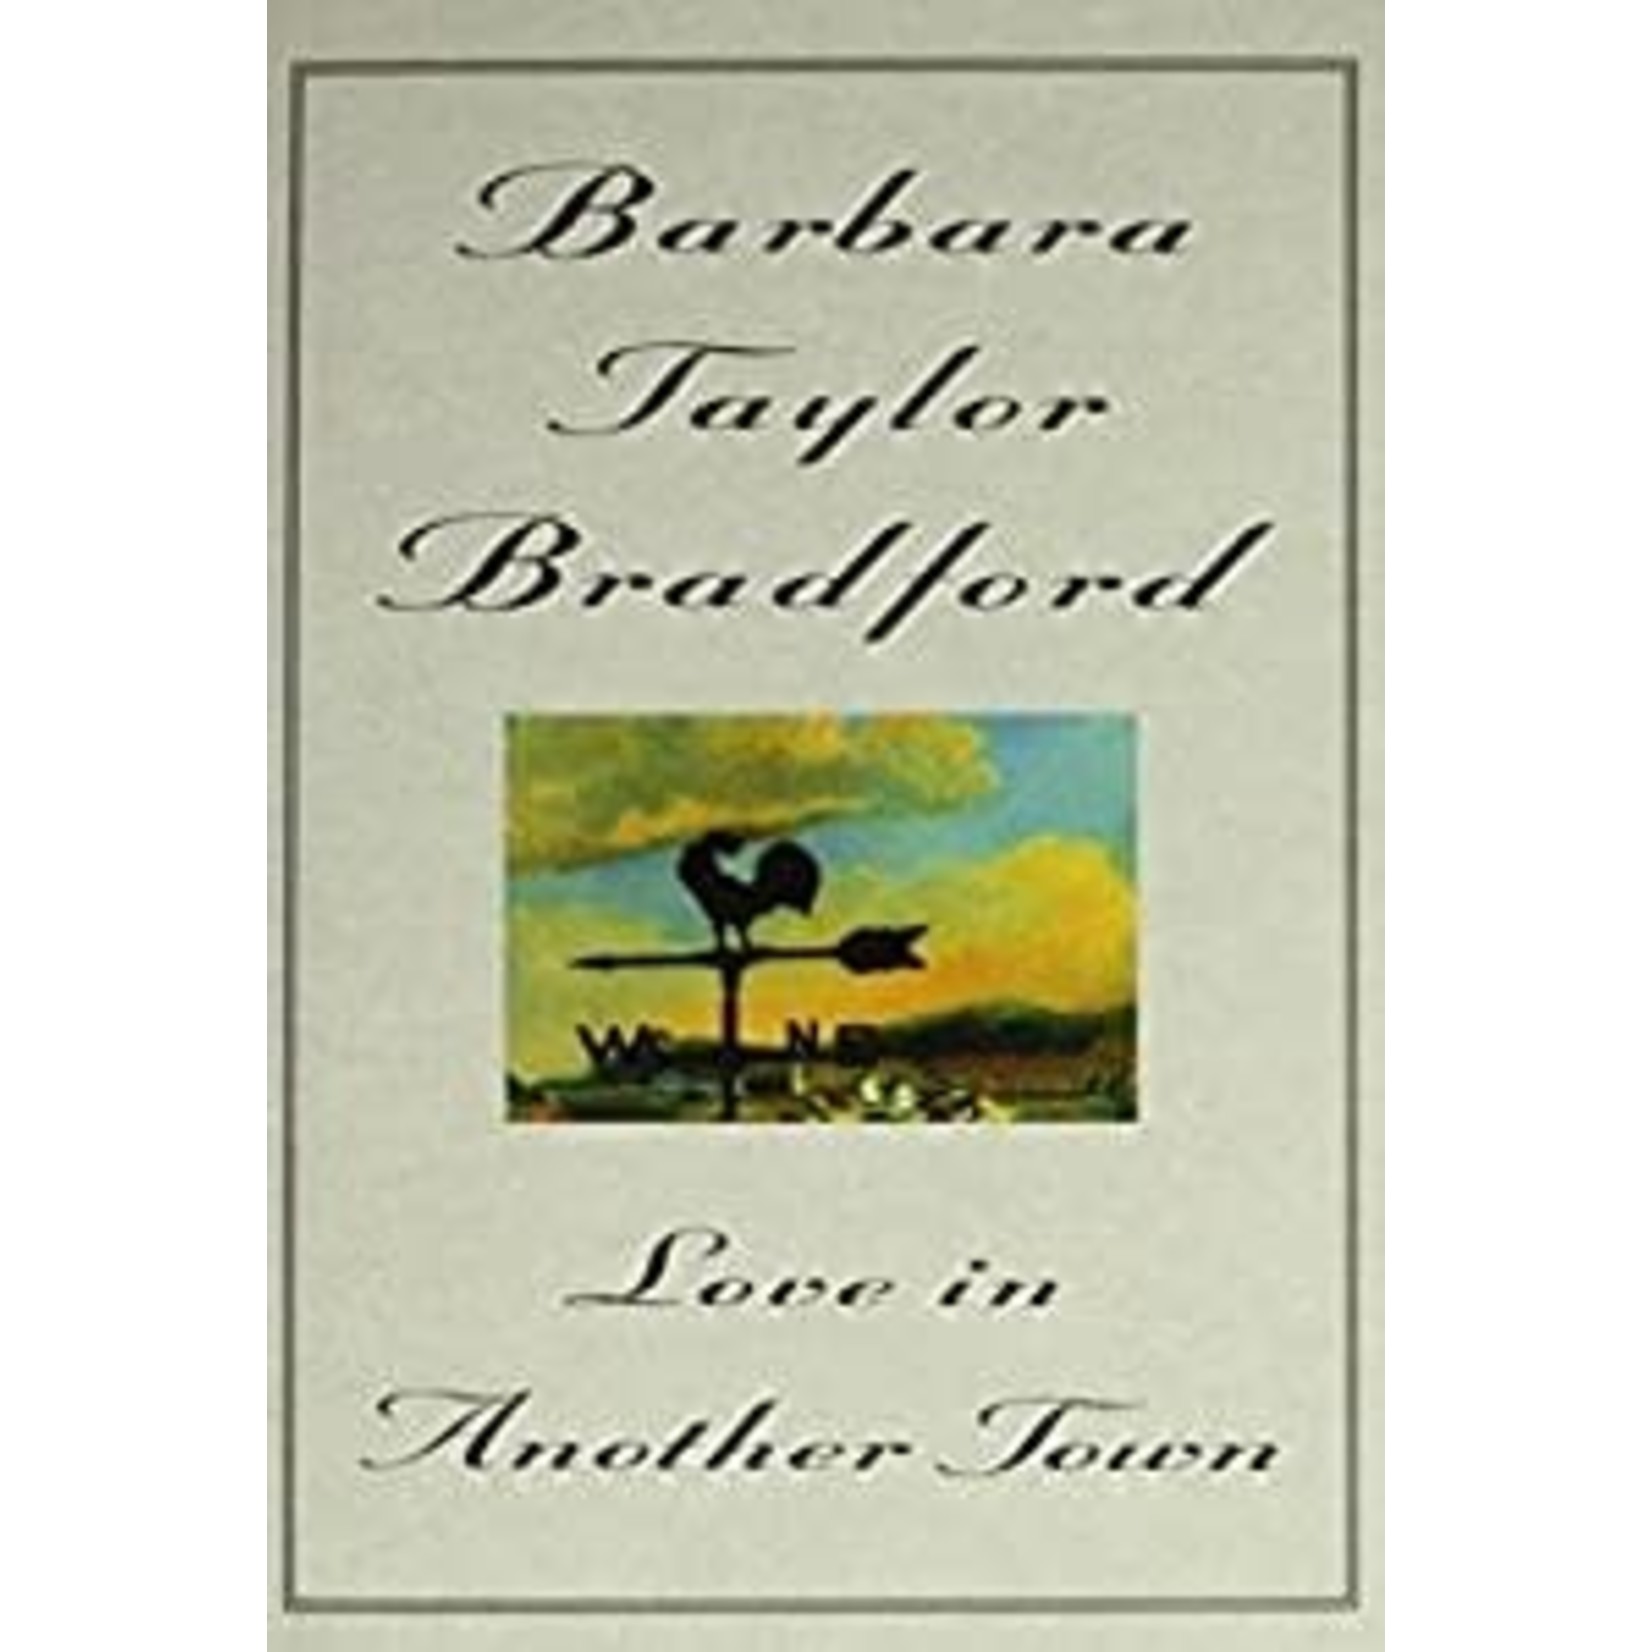 Bradford, Barbara Taylor Bradford, Barbara Taylor - Love in Another Town